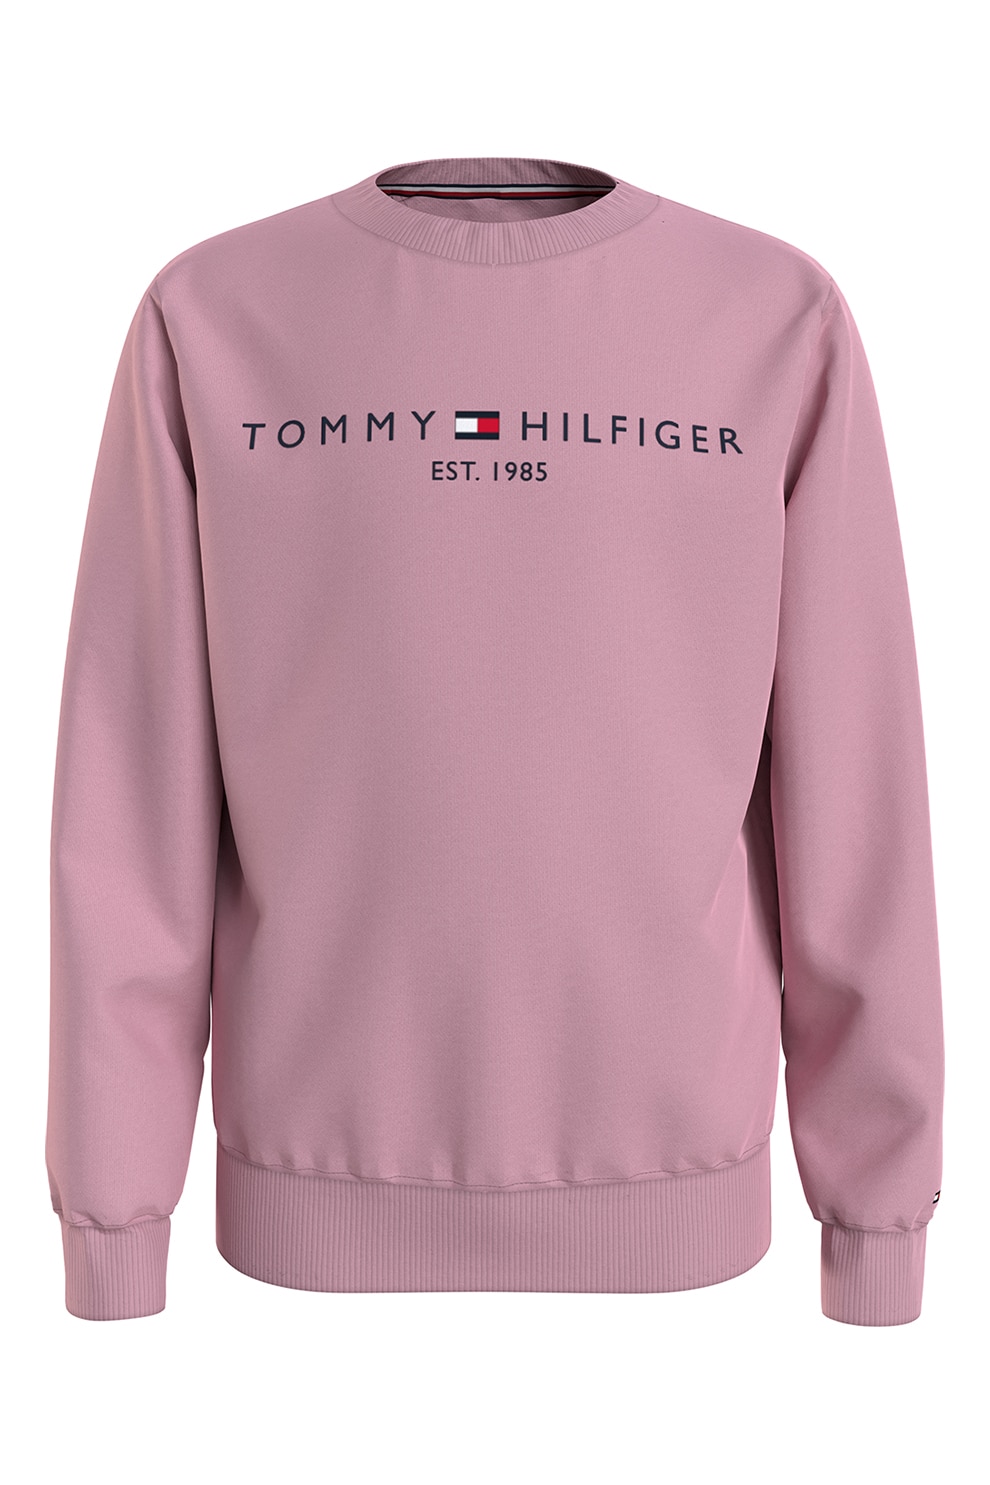 Sagging Patent stream Tommy Hilfiger, Bluza sport din amestec de bumbac organic cu imprimeu logo,  Roz, 128 CM - eMAG.ro